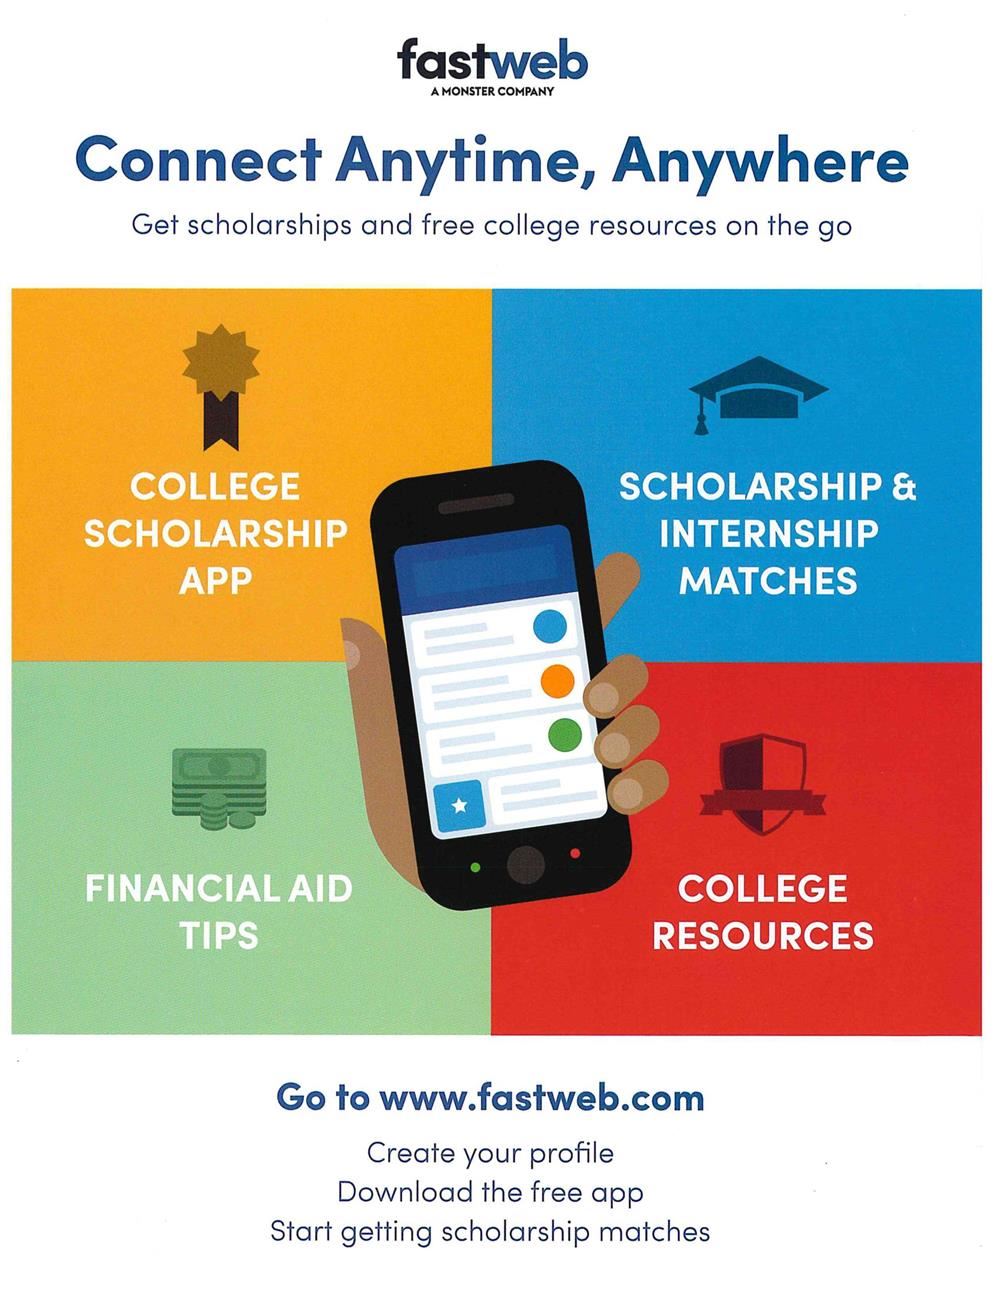 Fastweb scholarship information